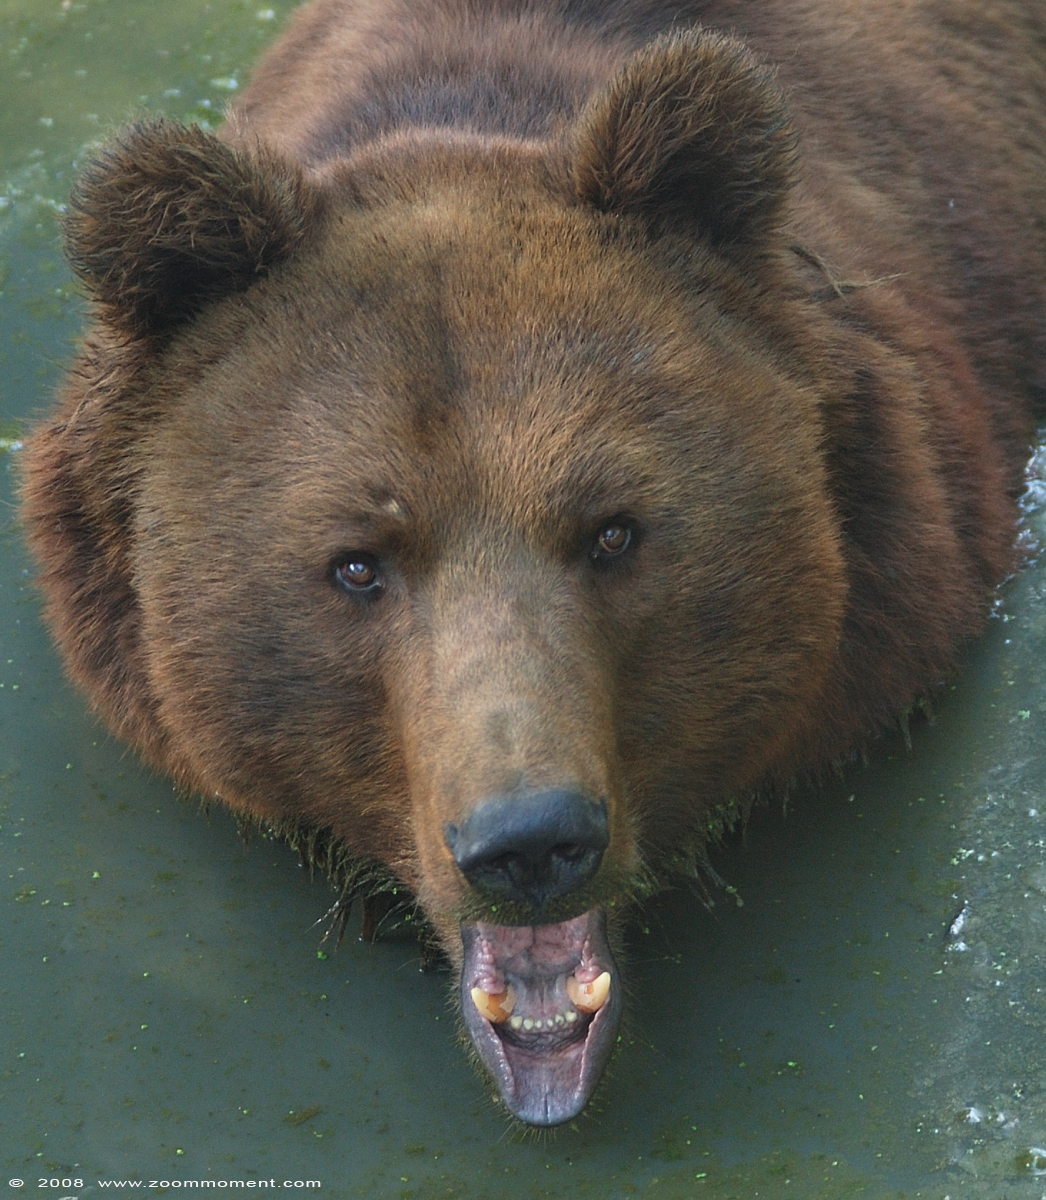 bruine beer ( Ursus arctos ) brown bear
Trefwoorden: Olmen zoo Belgium bruine beer Ursus arctos brown bear